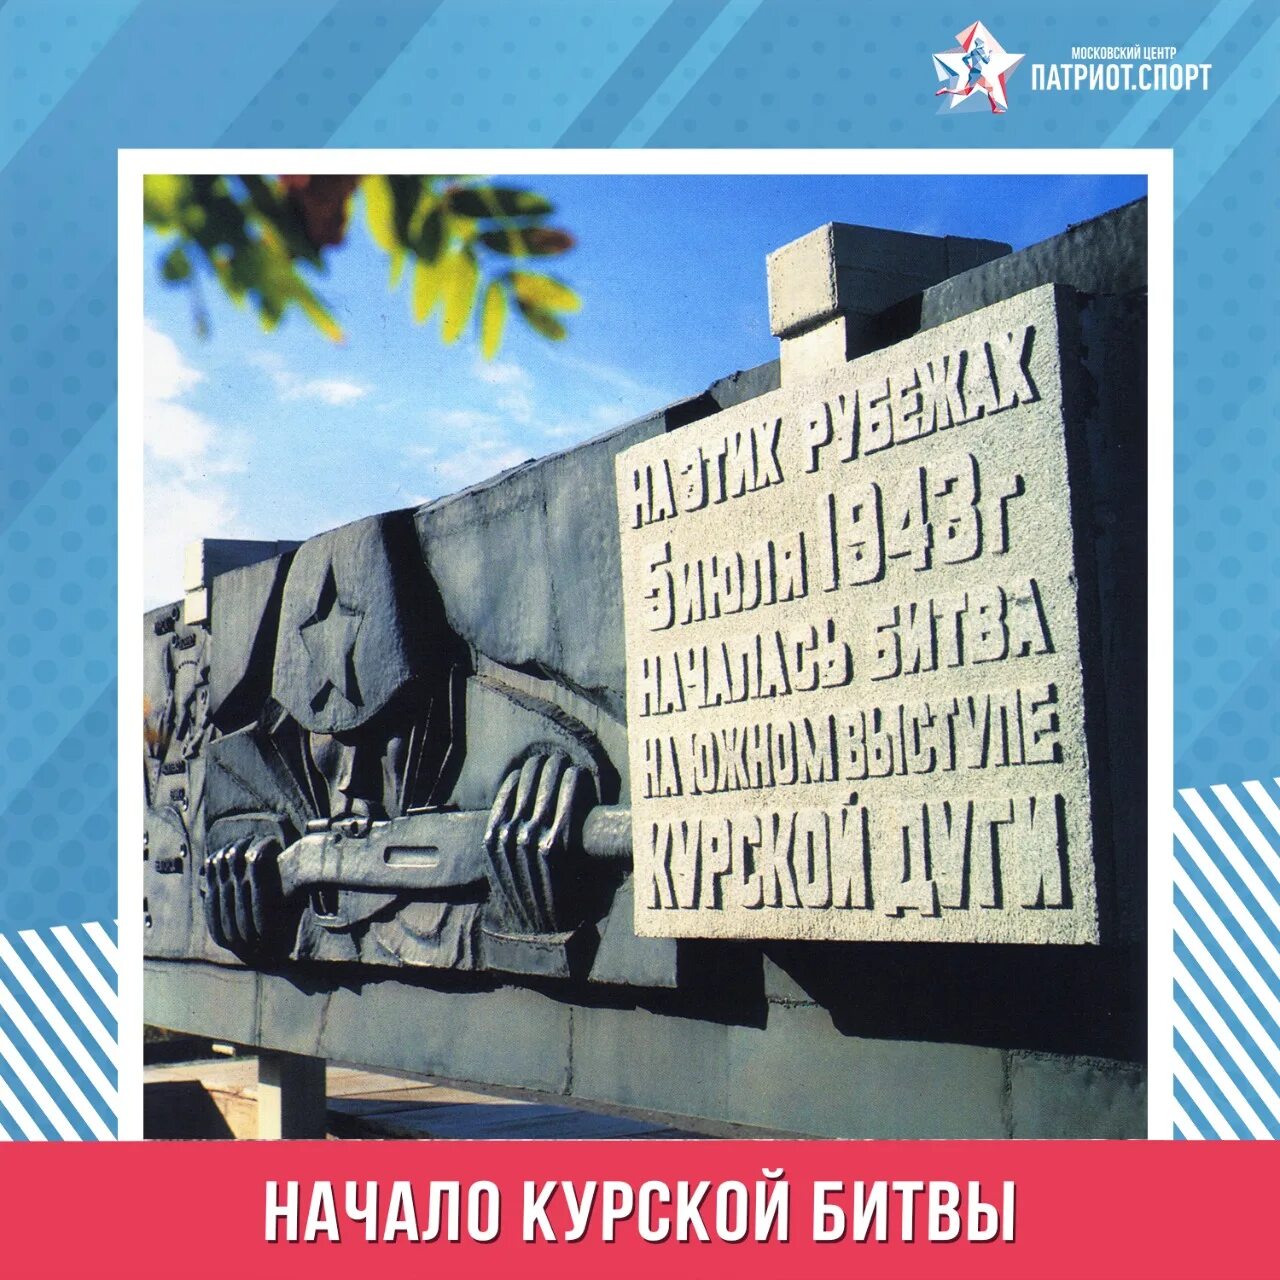 5 Июля началась Курская битва. Начало Курской битвы. Курская битва 1943. 5 Июля 1943 года началась Курская битва.